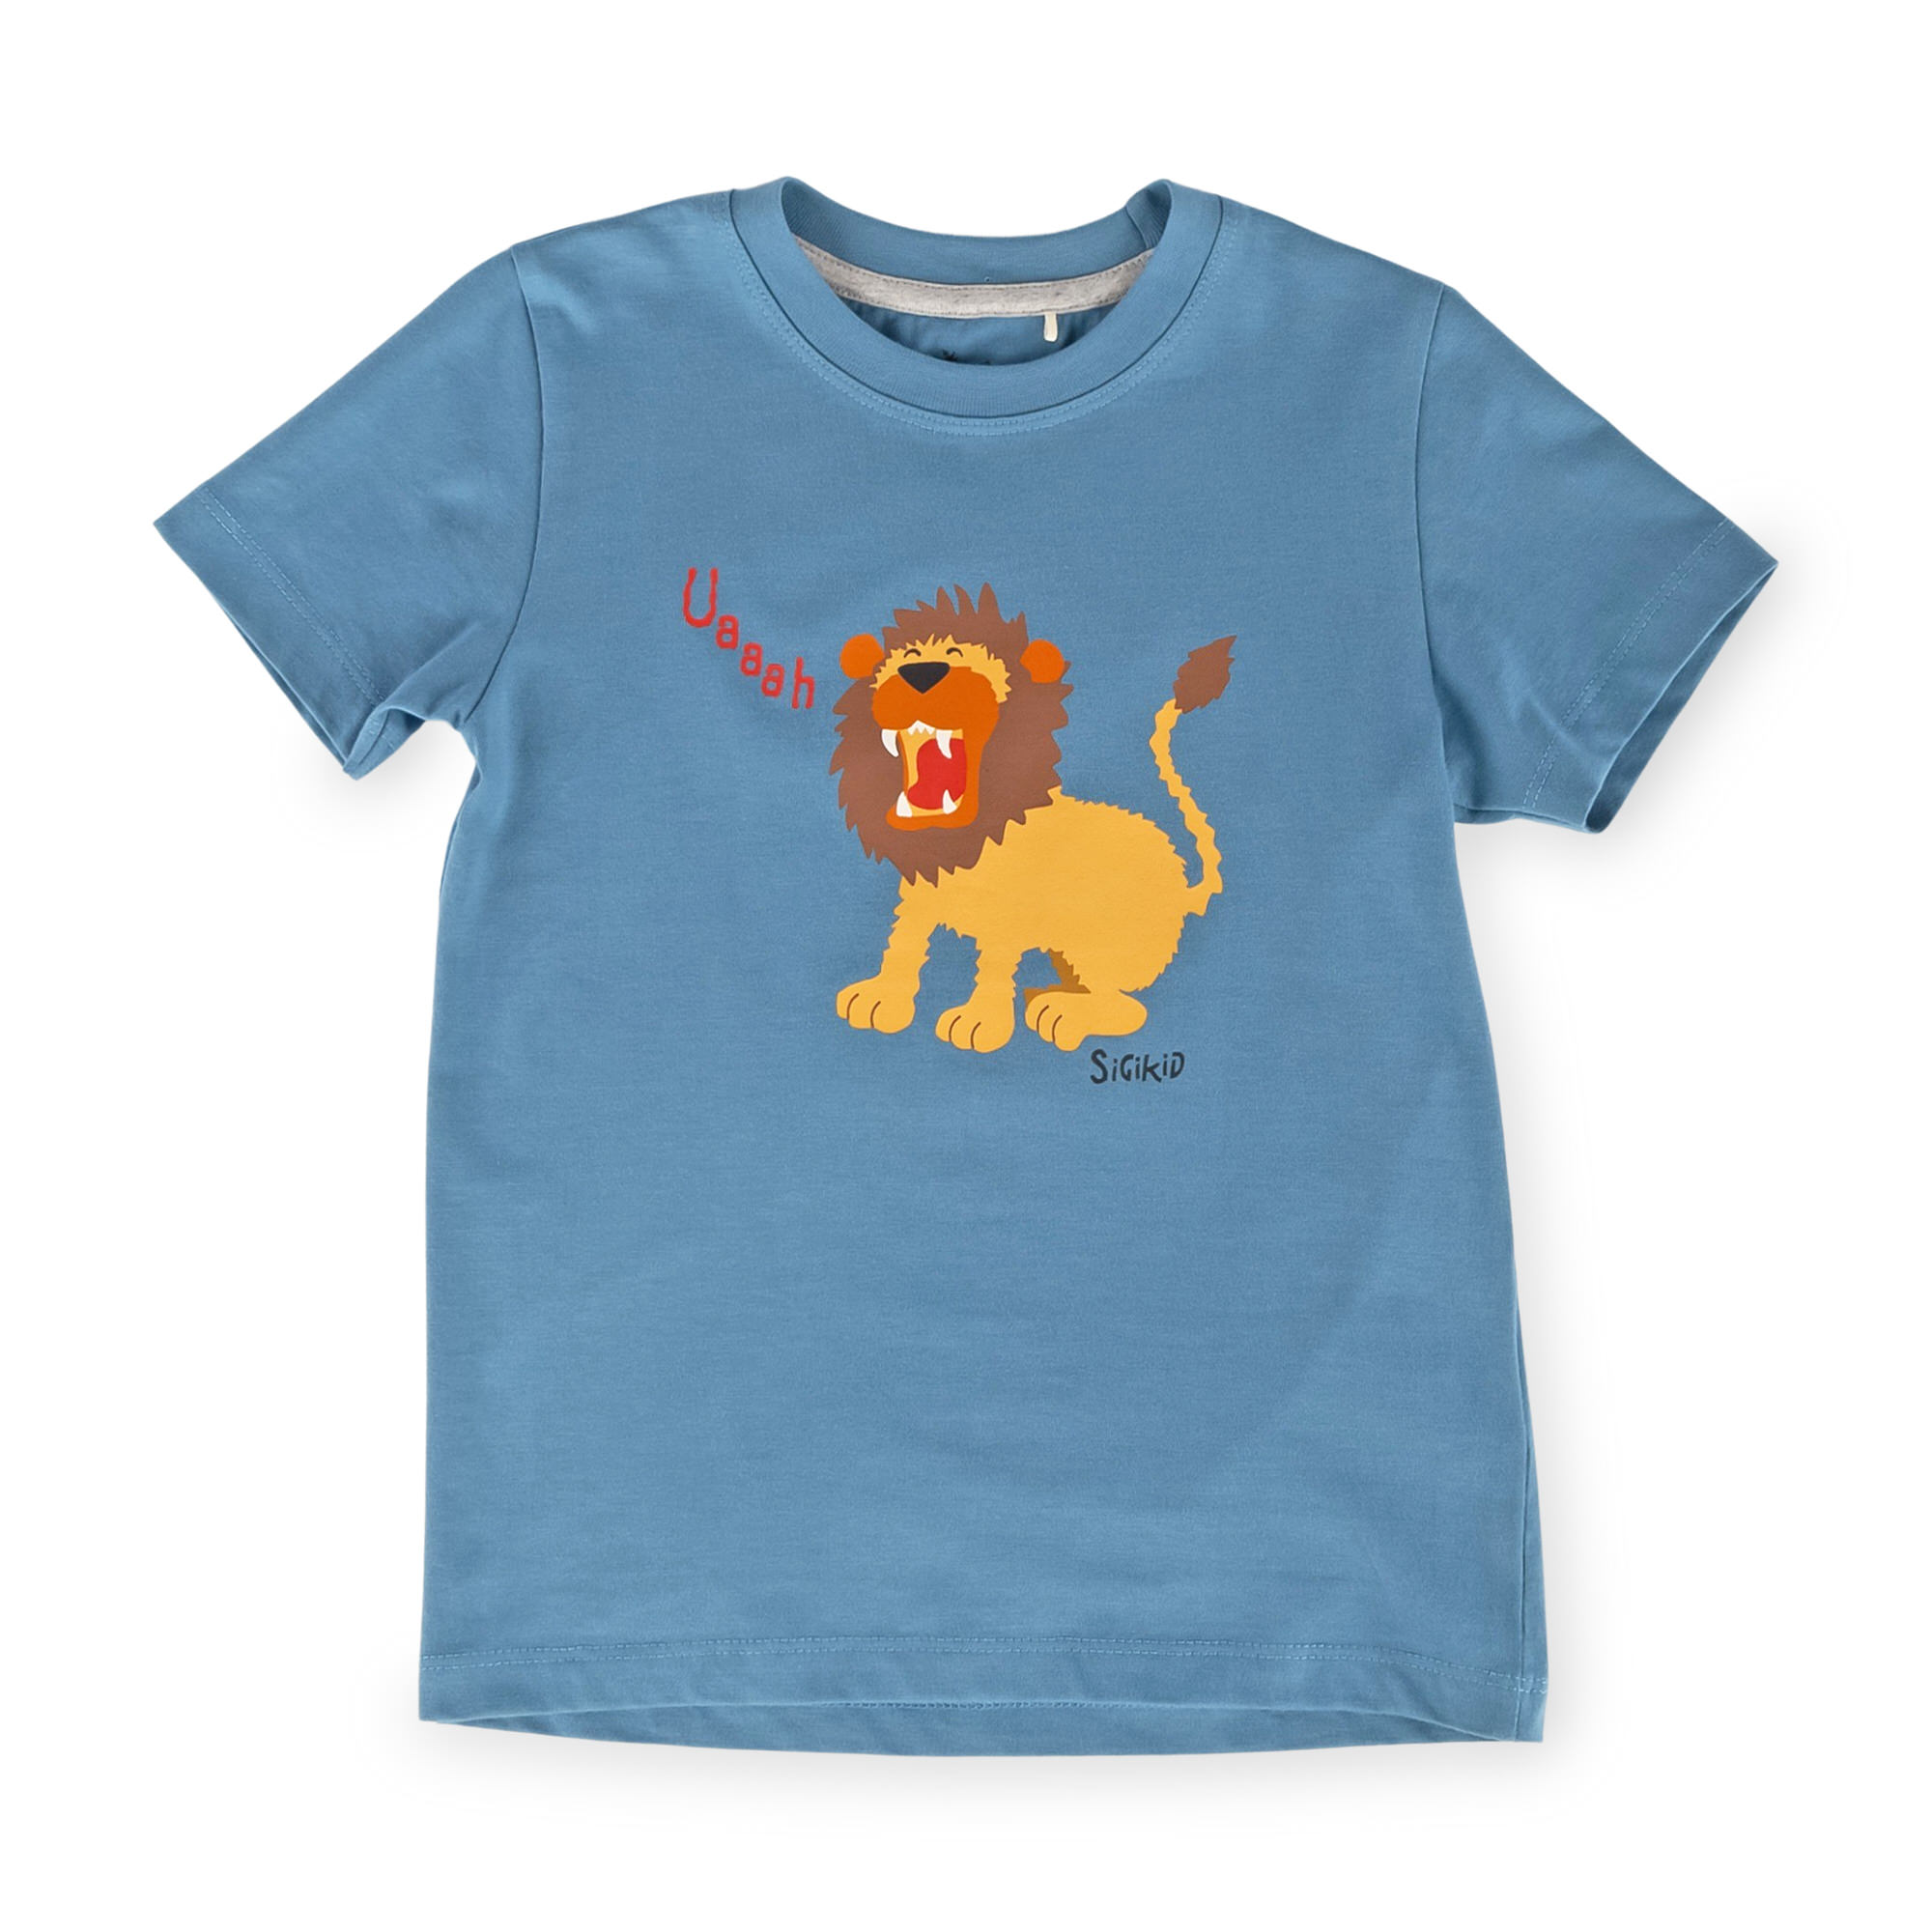 Children's two piece pajamas yawning lion